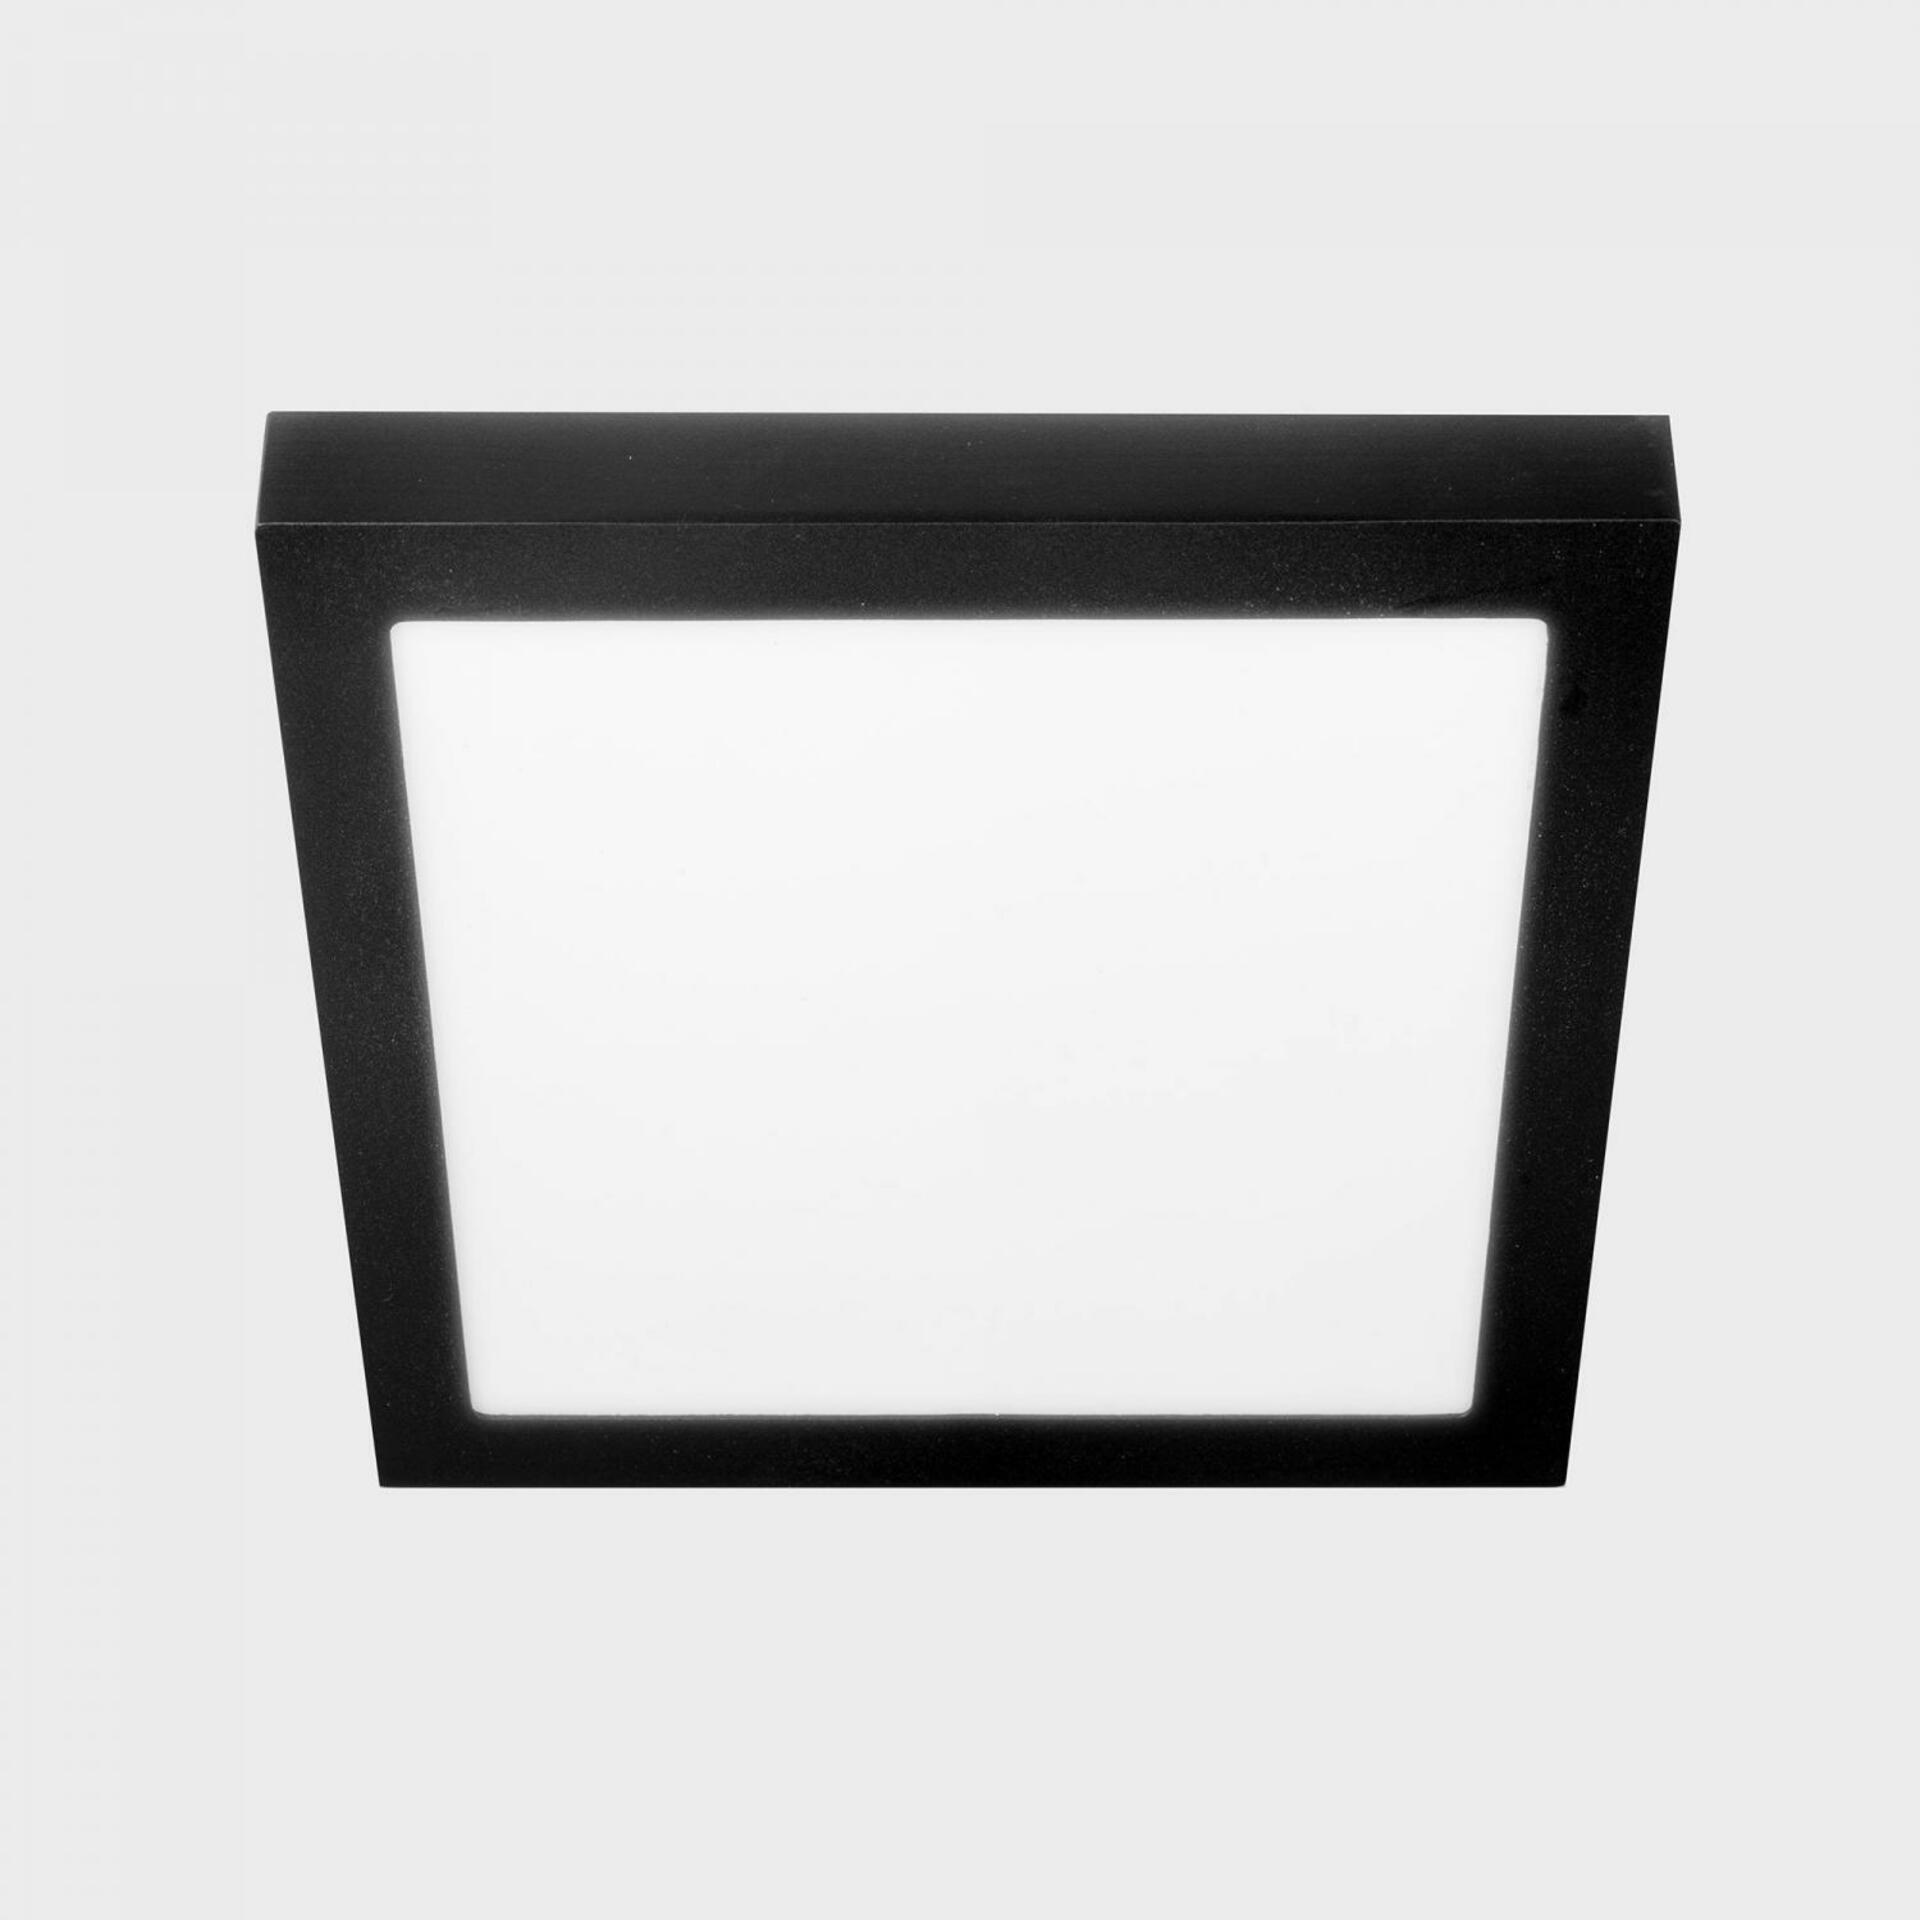 KOHL LIGHTING KOHL-Lighting DISC SLIM SQ stropní svítidlo 300x300 mm černá 24 W CRI 80 4000K Non-Dimm